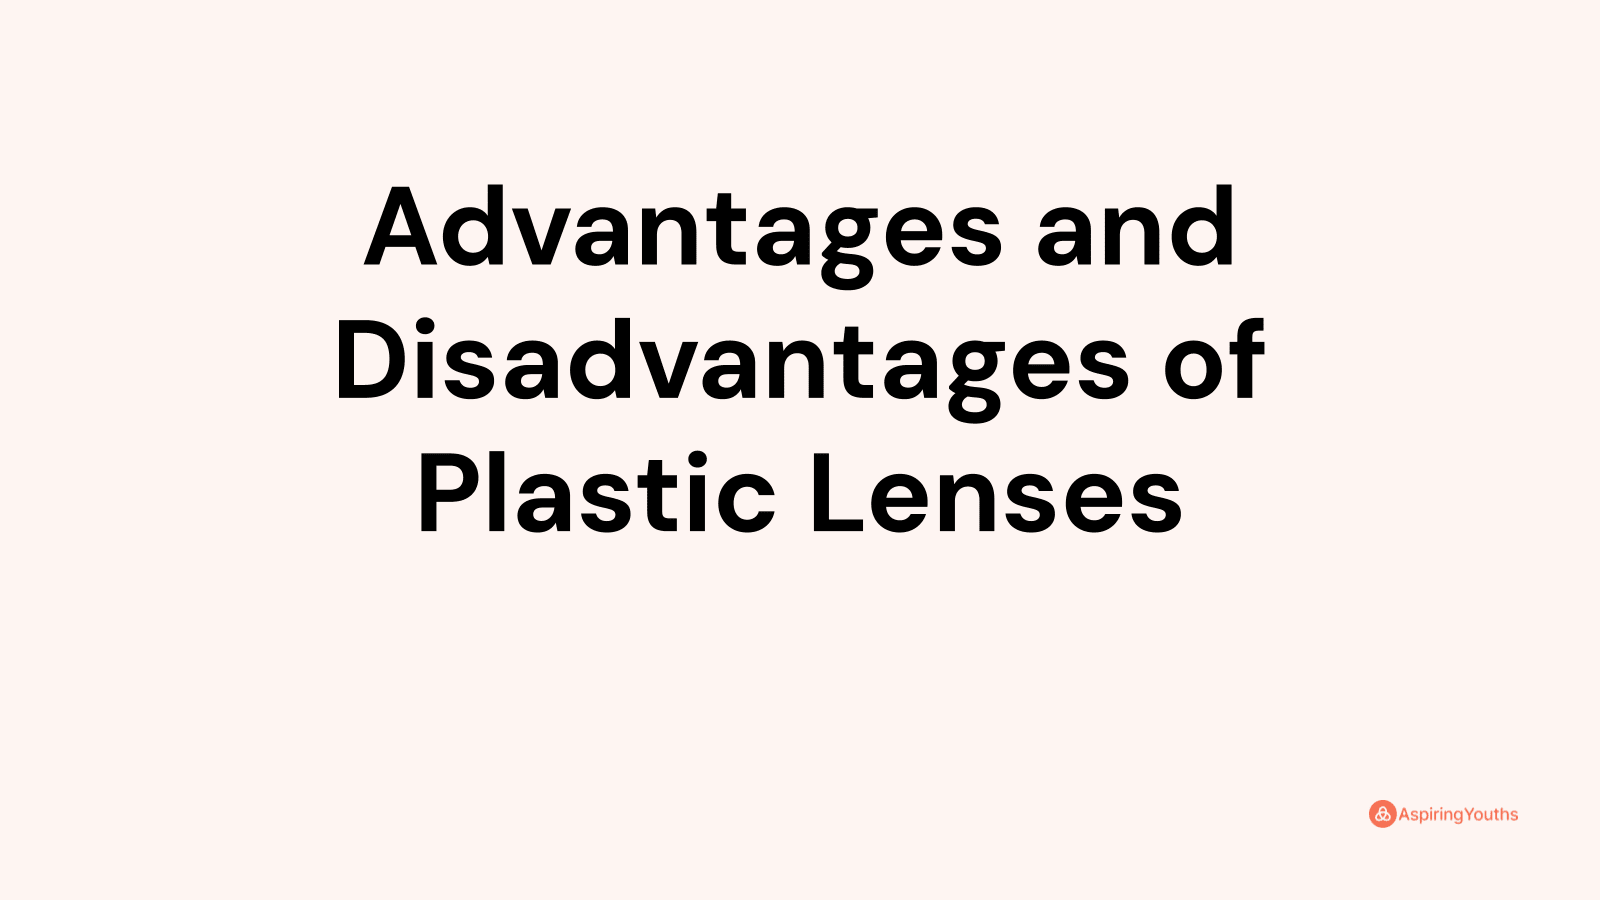 Advantages and disadvantages of Plastic Lenses